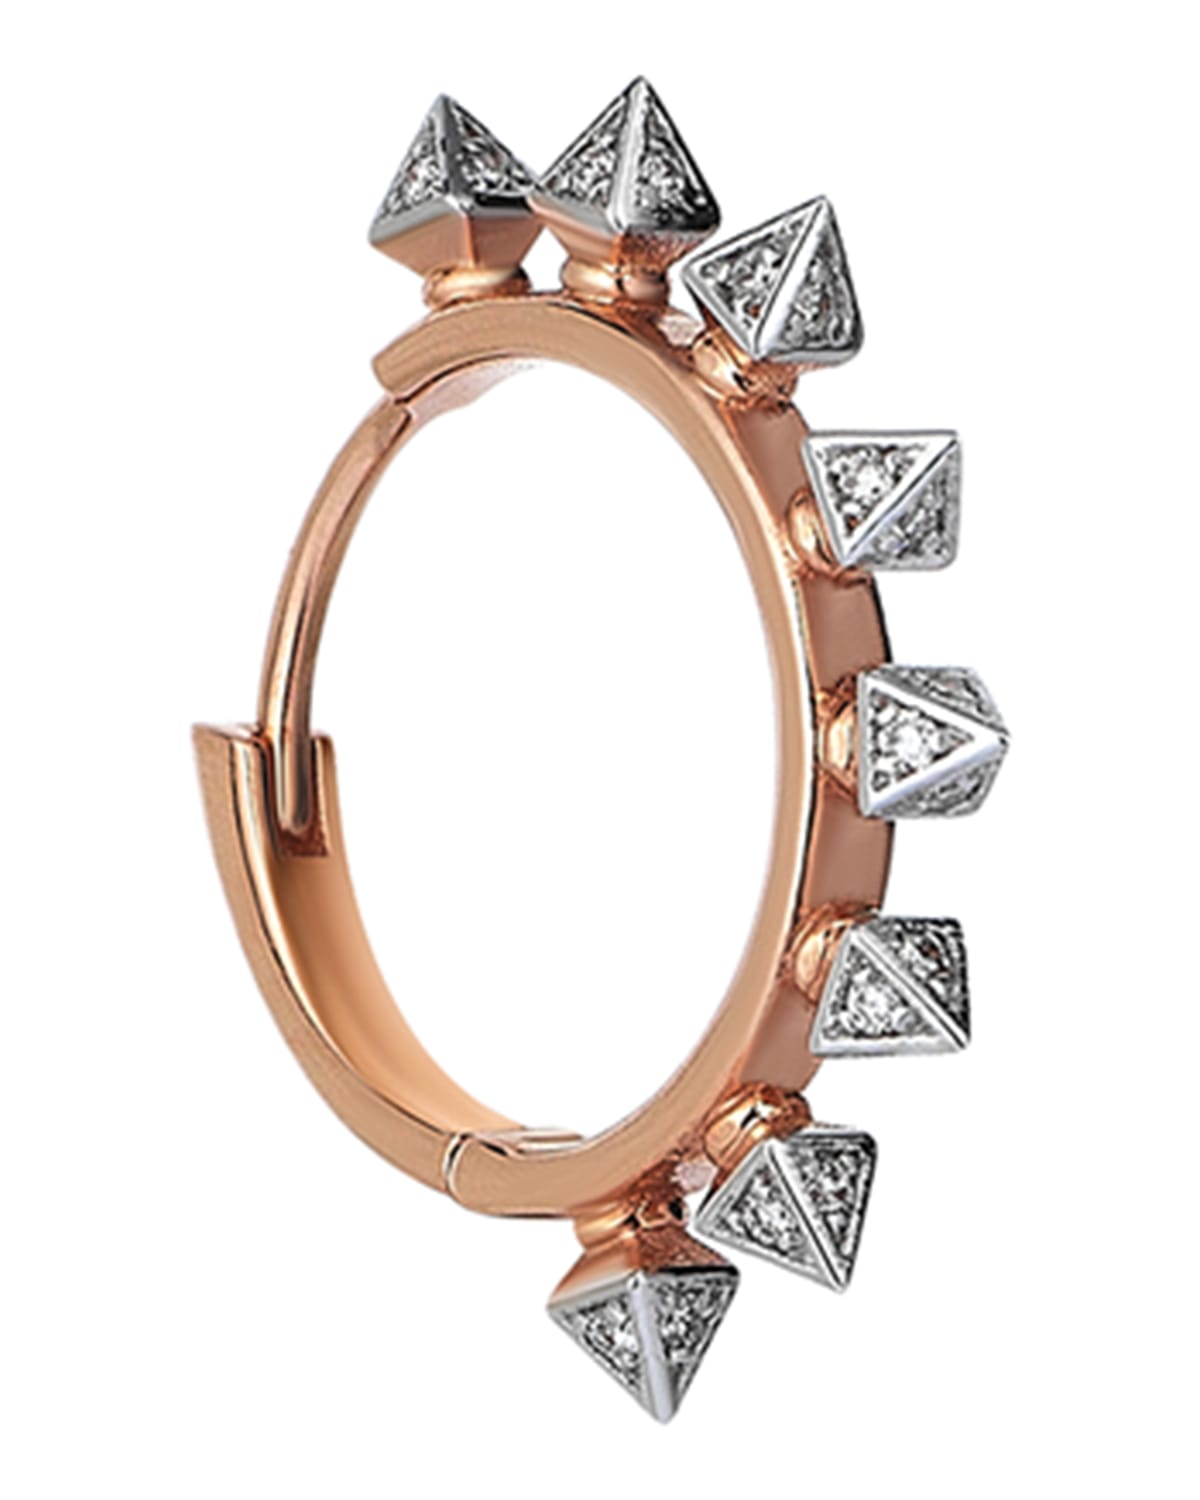 14k Rose Gold Diamond 8-Triangle Prism Hoop Earring, Single